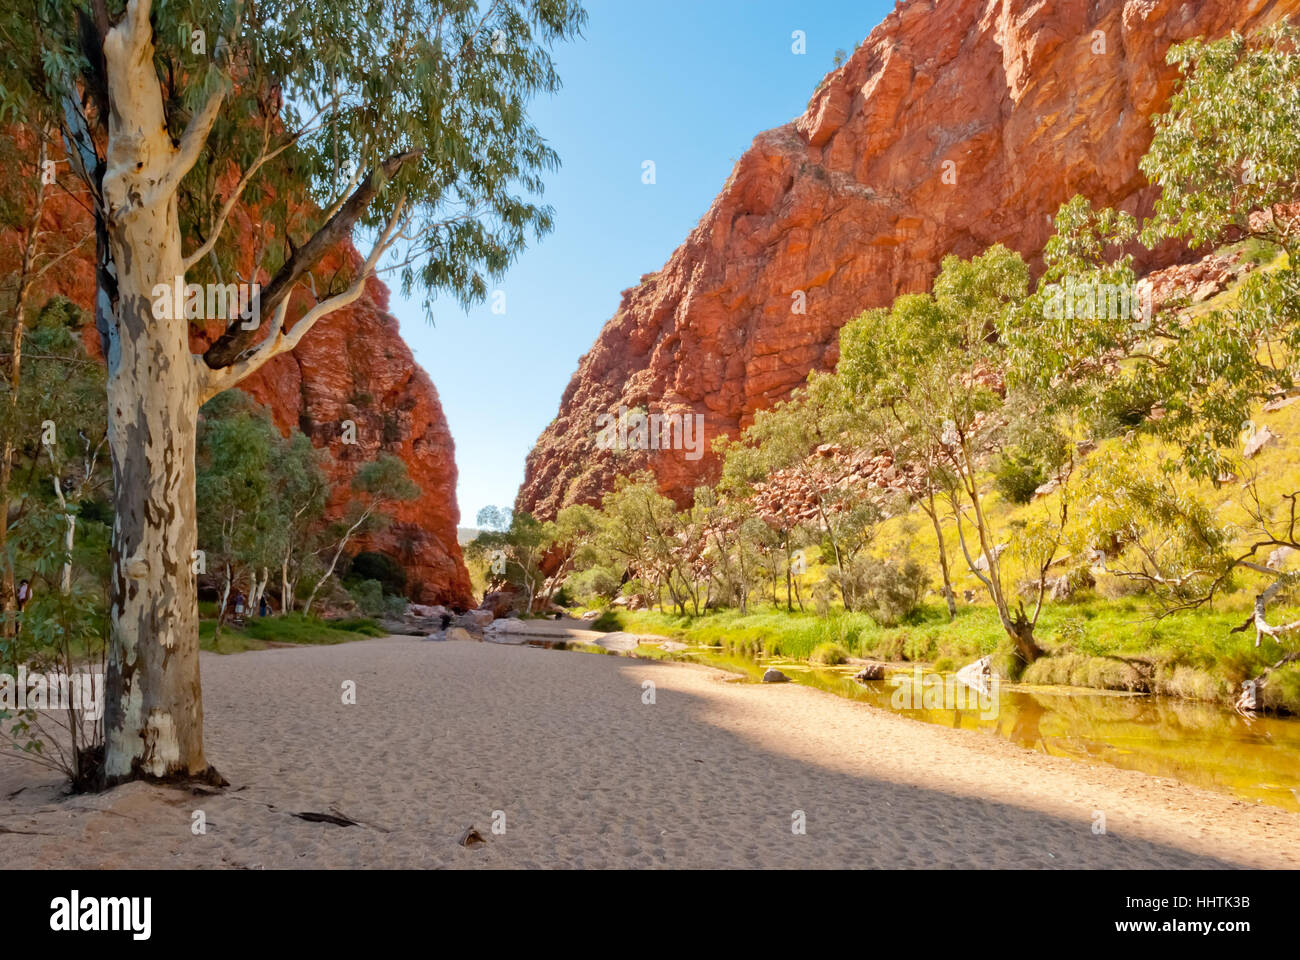 Wild nature at Simpsons Gap, Northen Territory, Australia Stock Photo